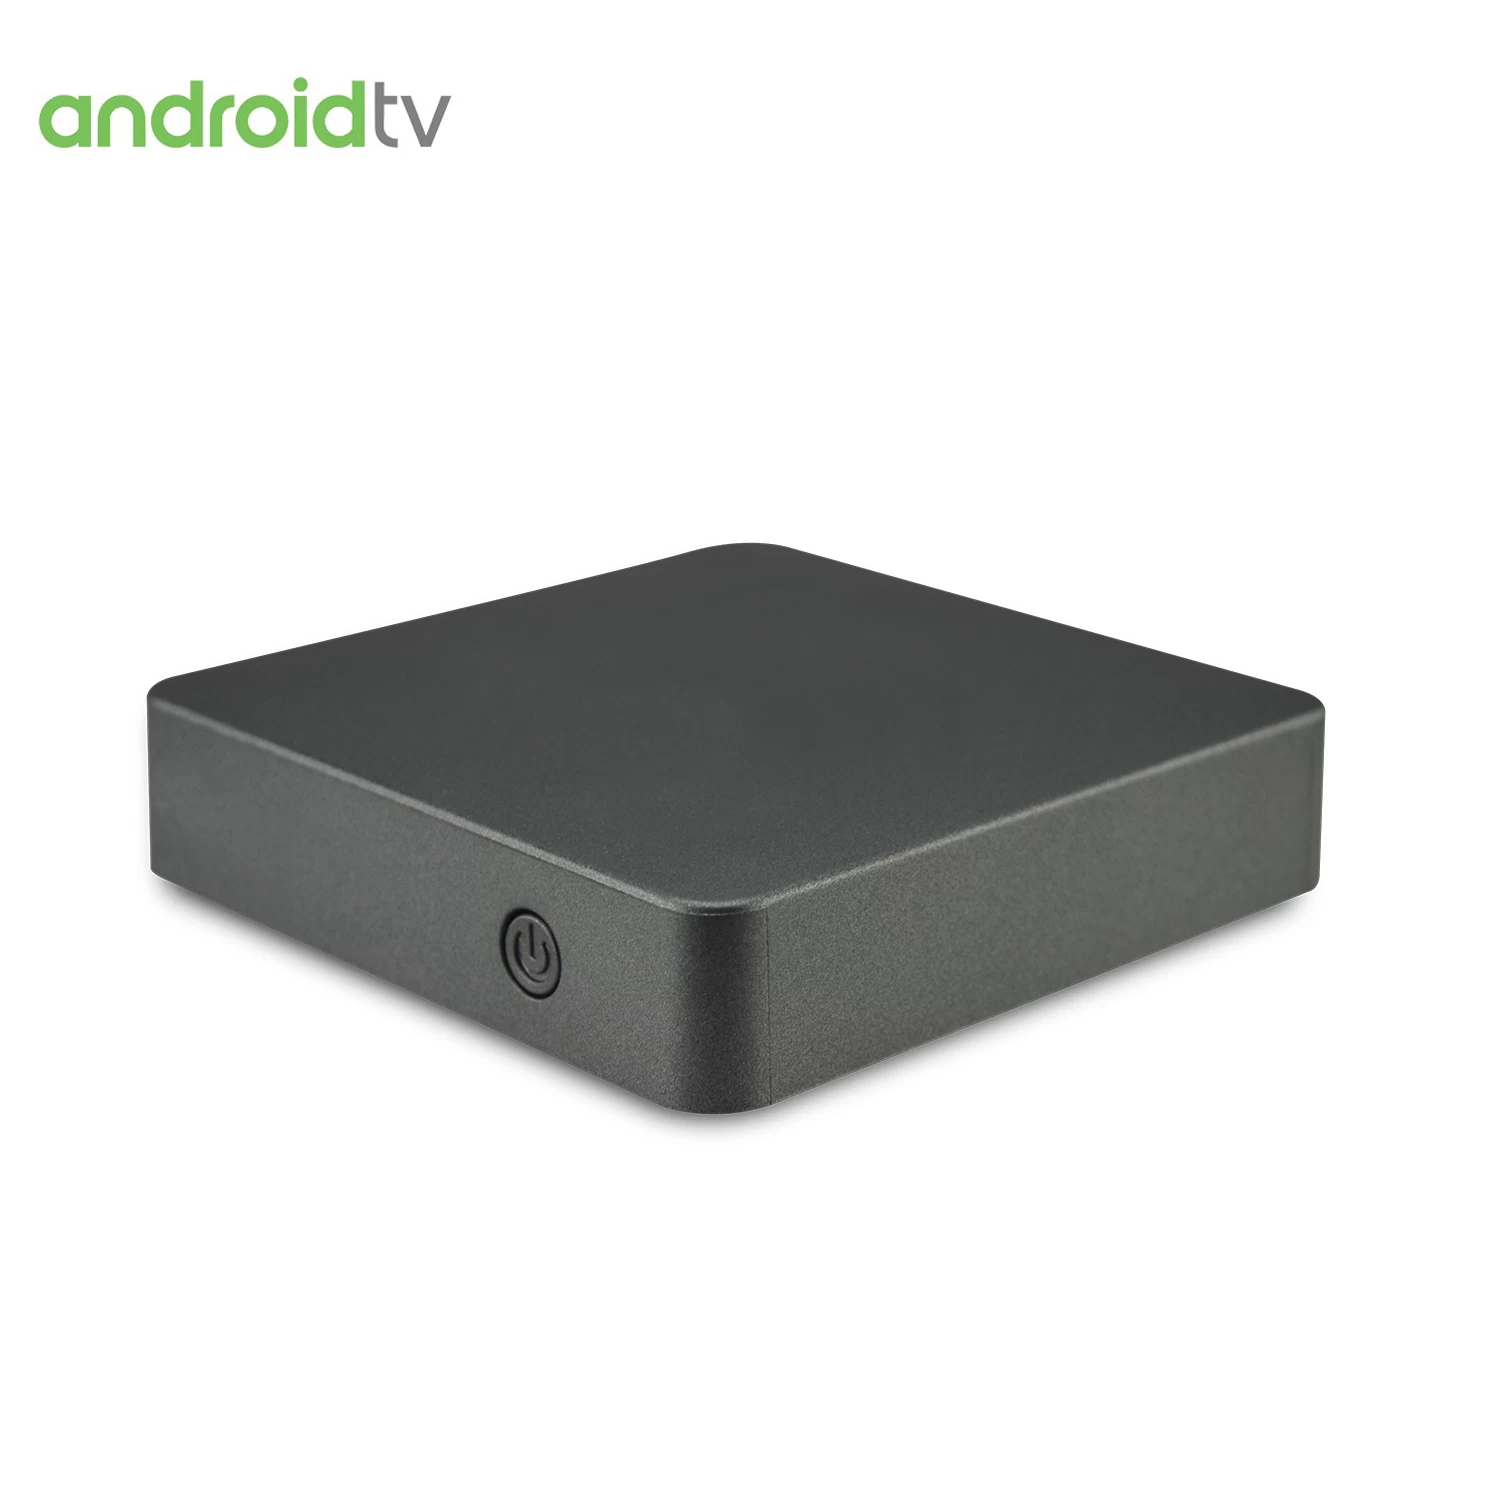 Android TV에 제공되는 Google Assistant 음성 제어